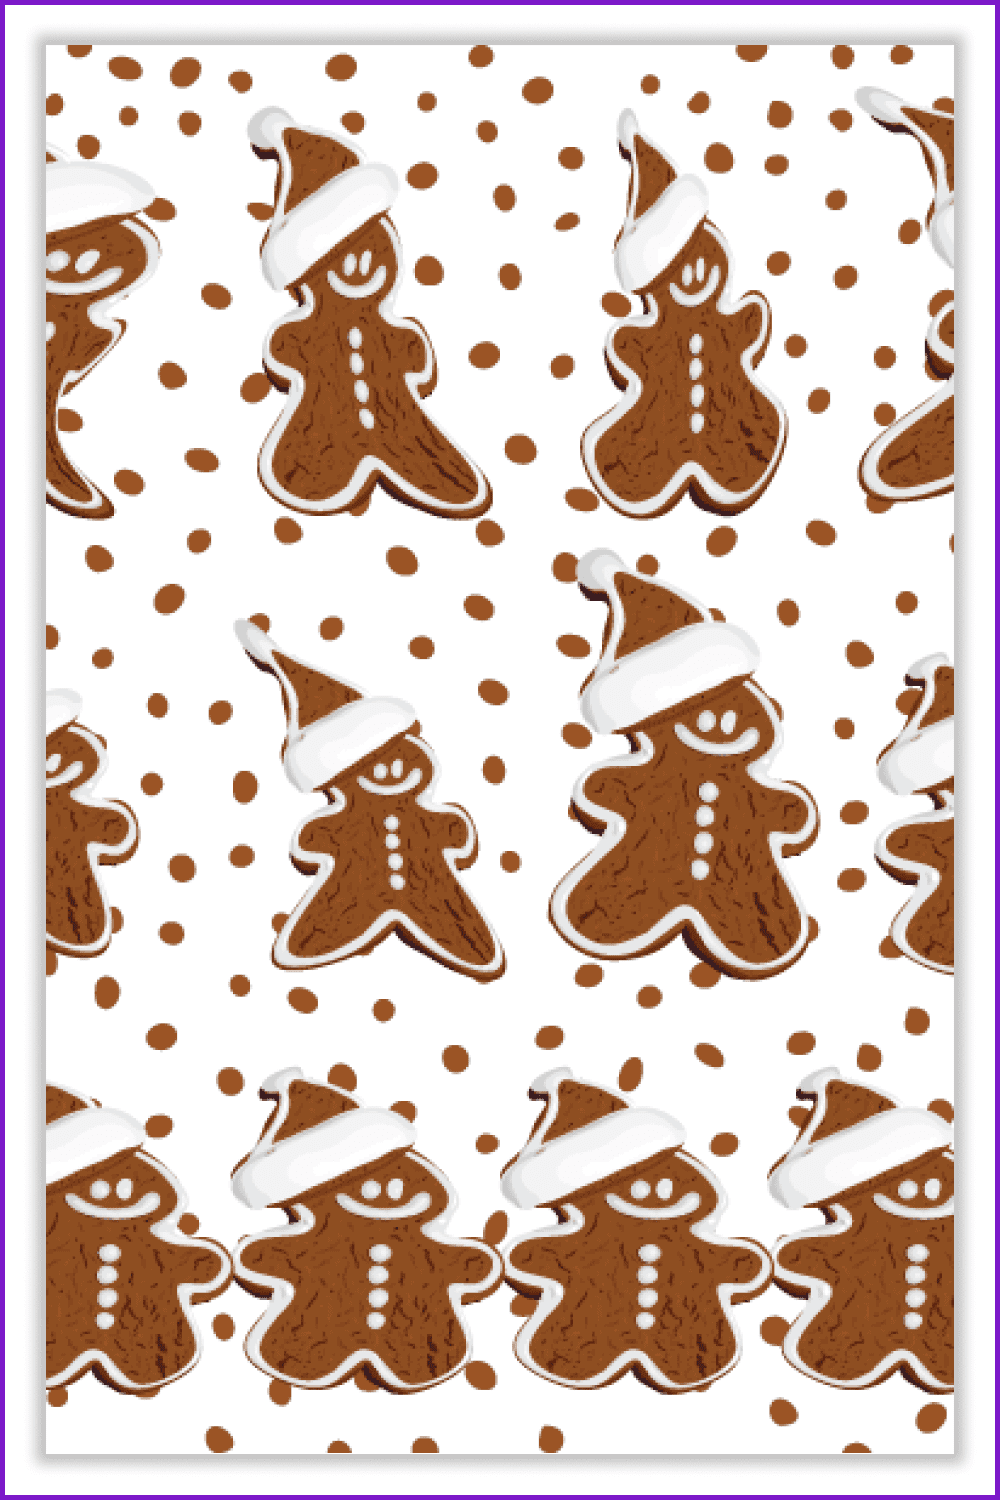 Image of brown cookies with santa claus hat.